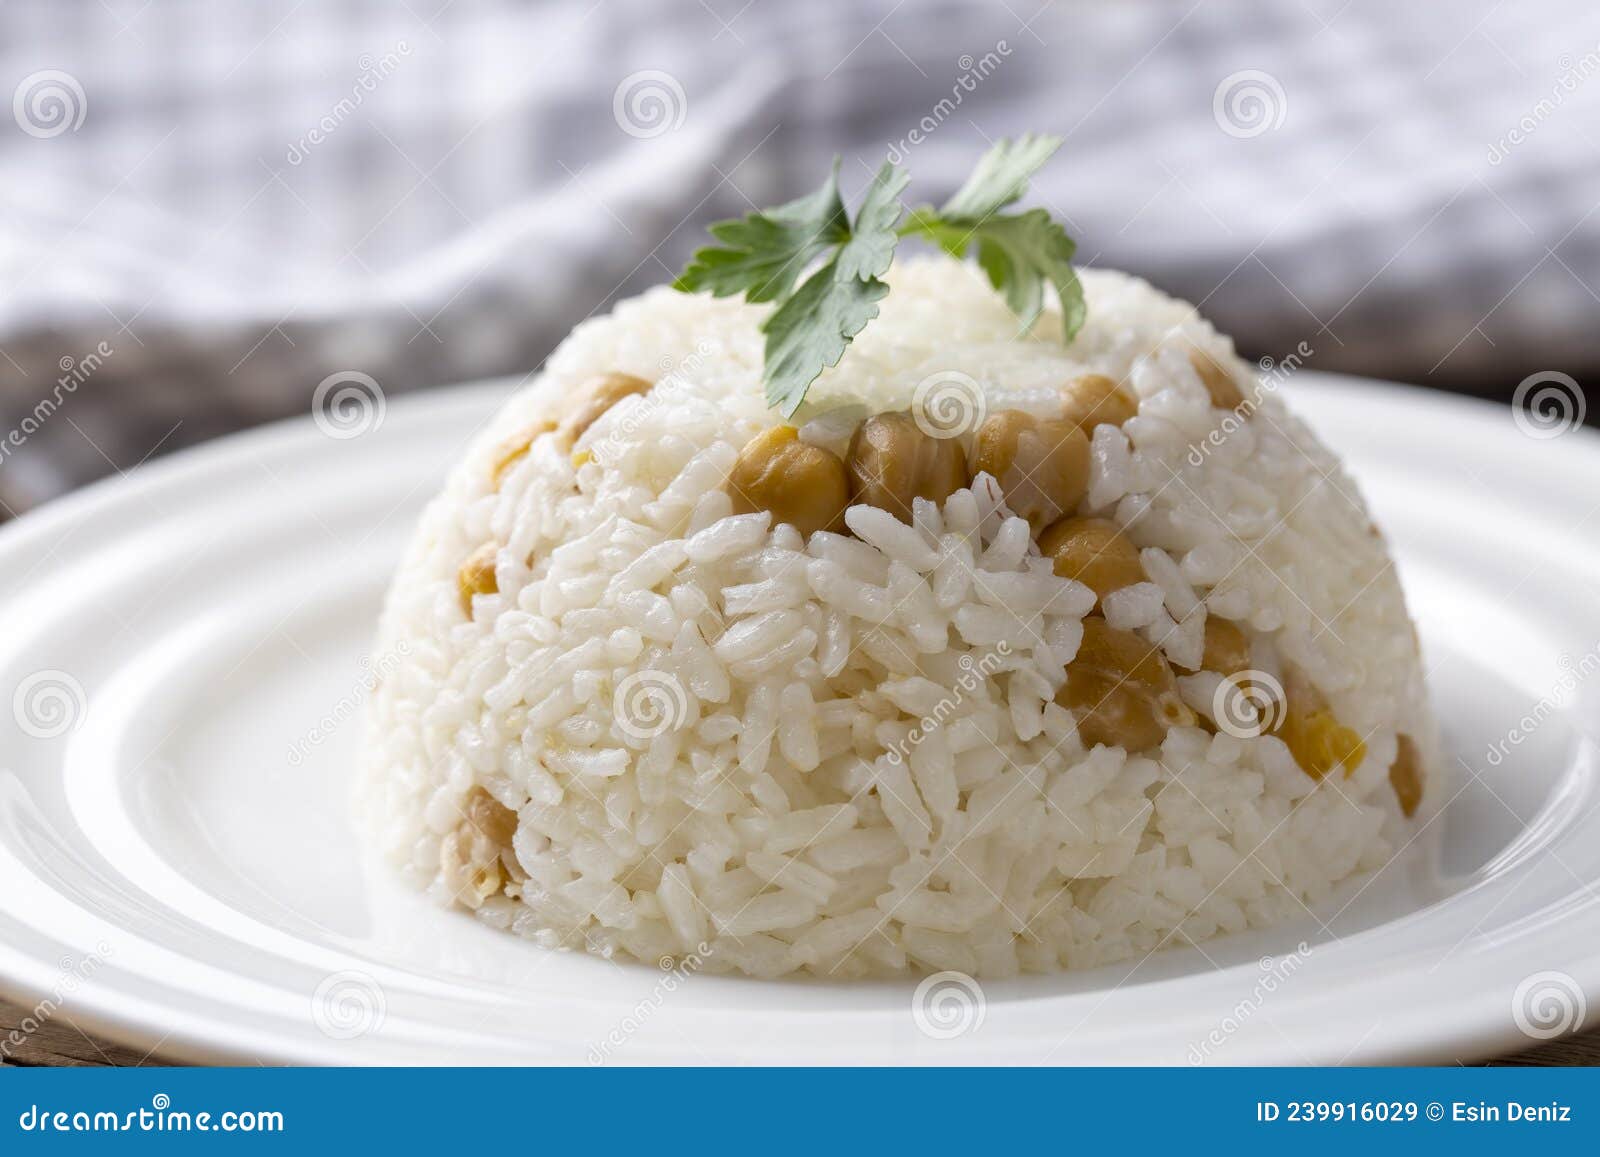 turkish rice with chickpea served, turkish name; nohutlu pilav or pilaf